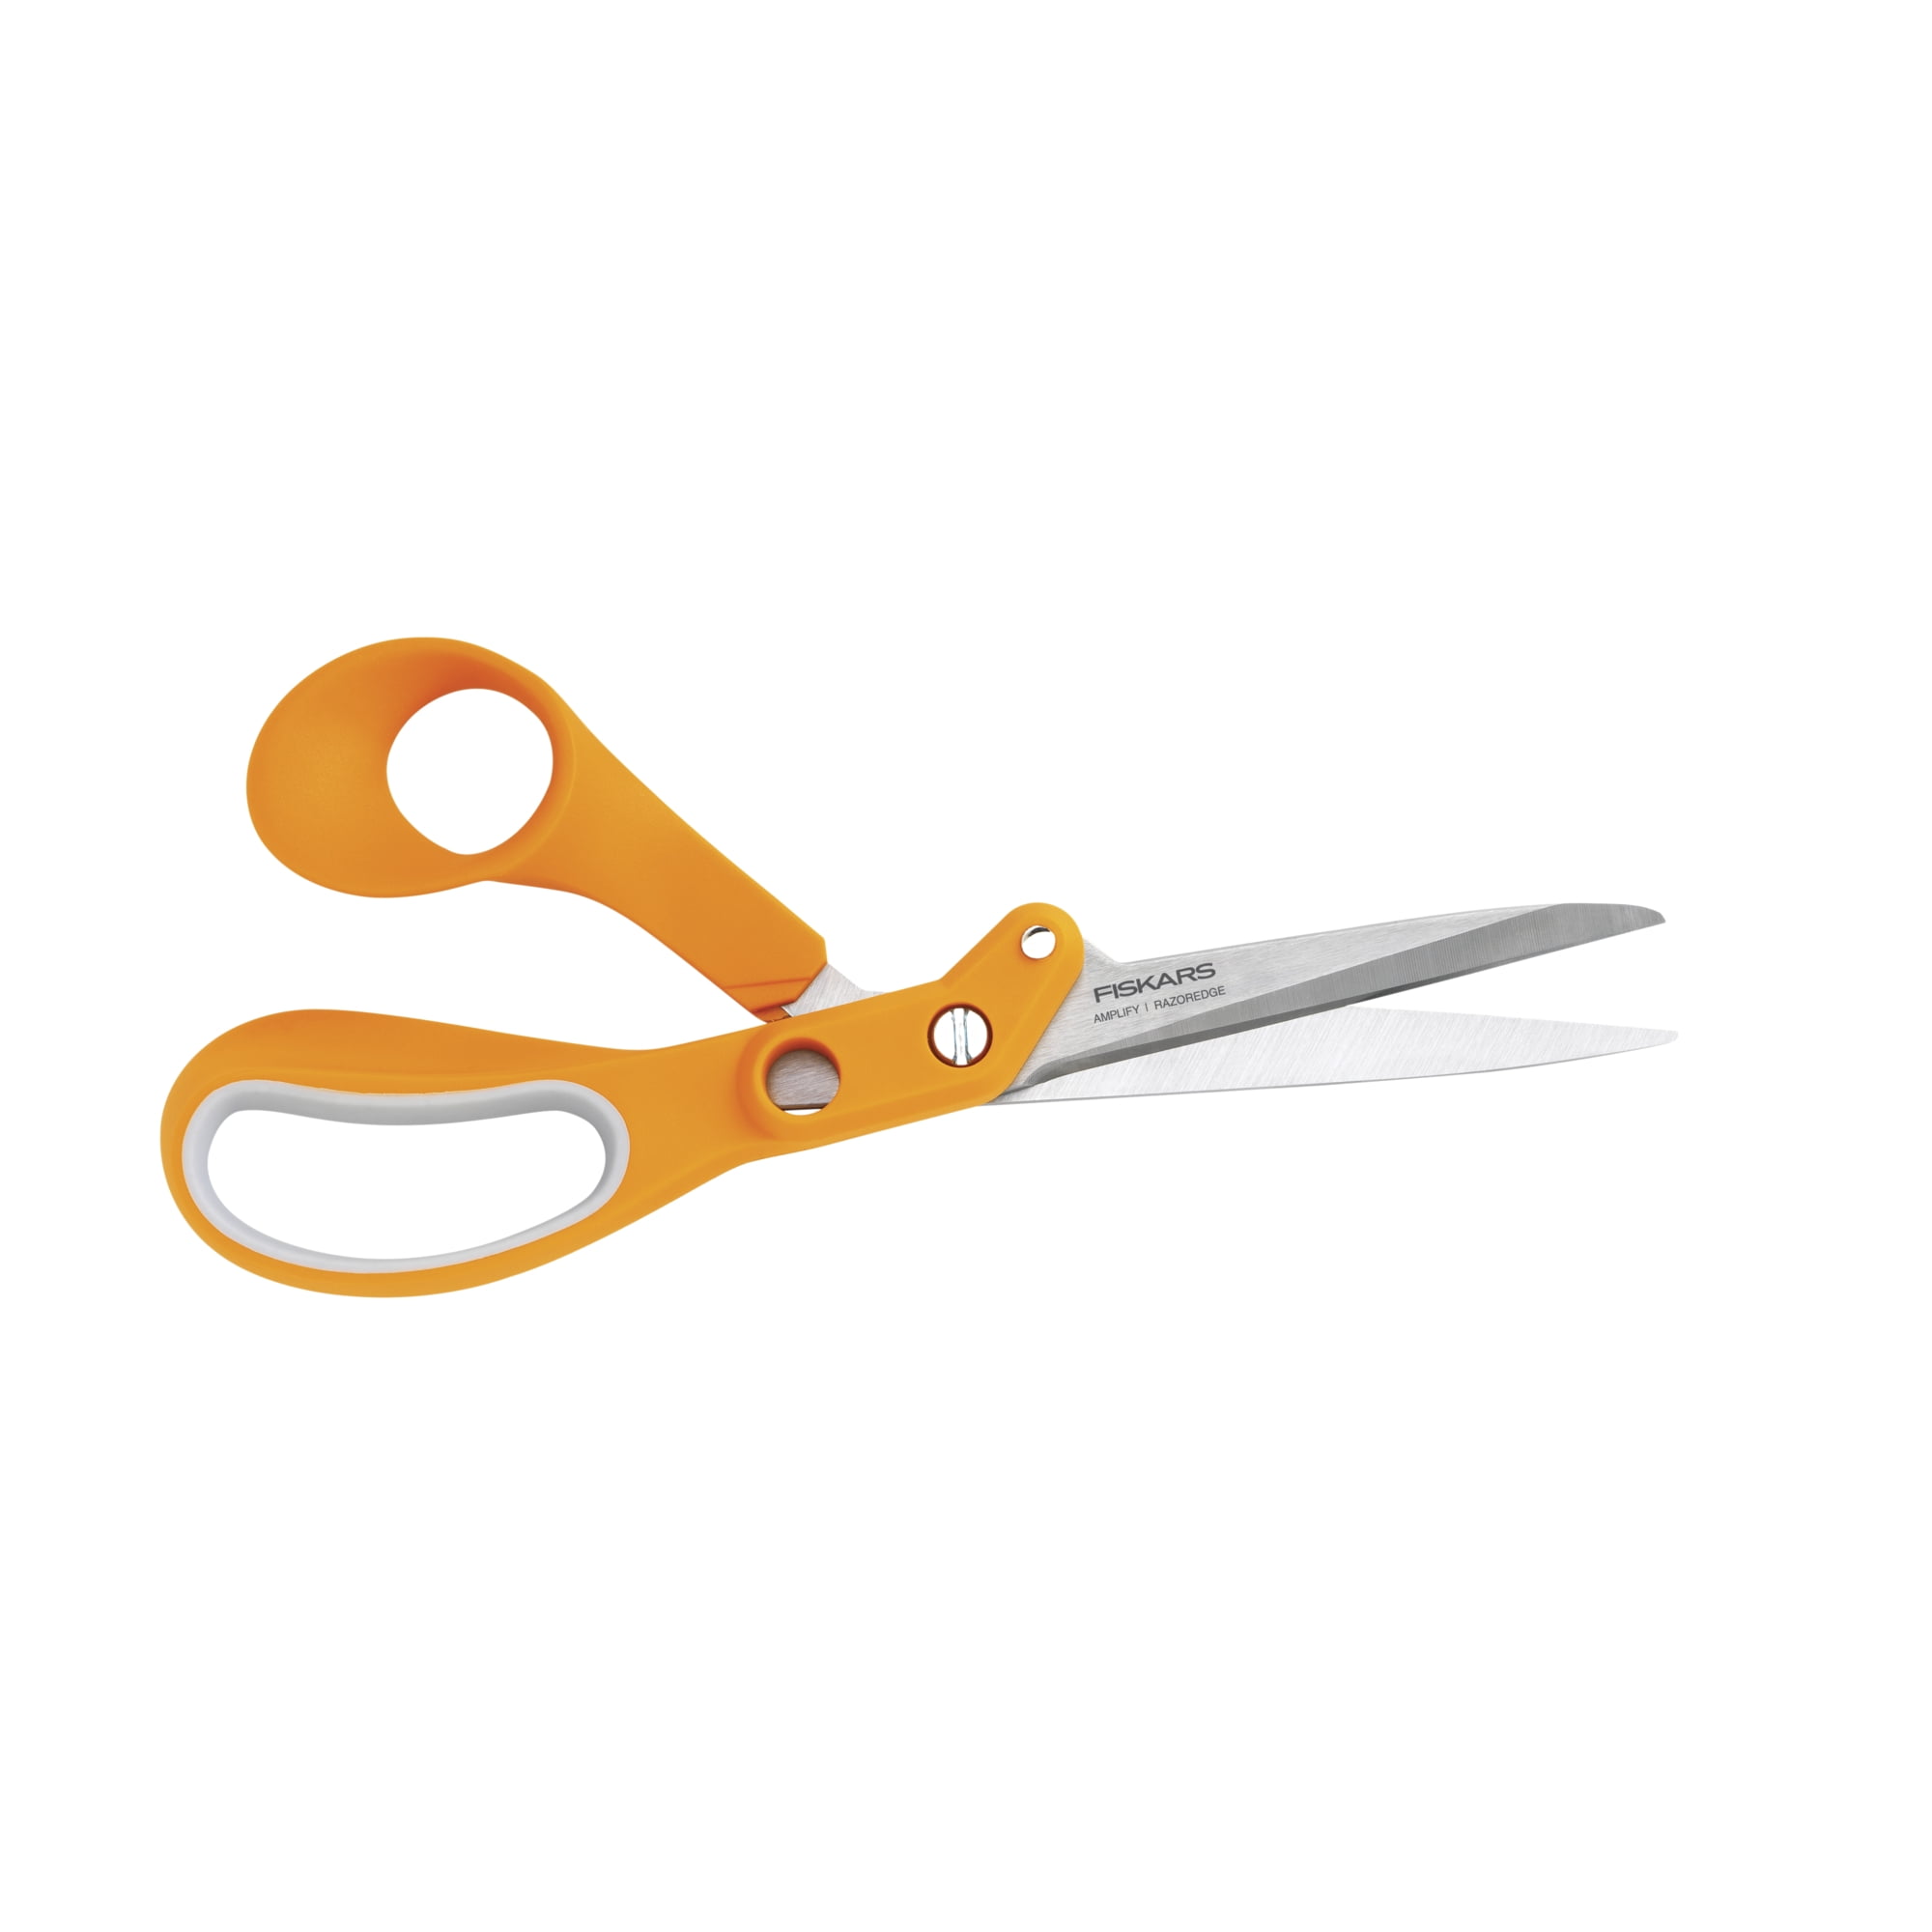 Arteza Fabric Scissors, Iridescent Blade, Ultra-Sharp, Assorted Sizes - Set of 3